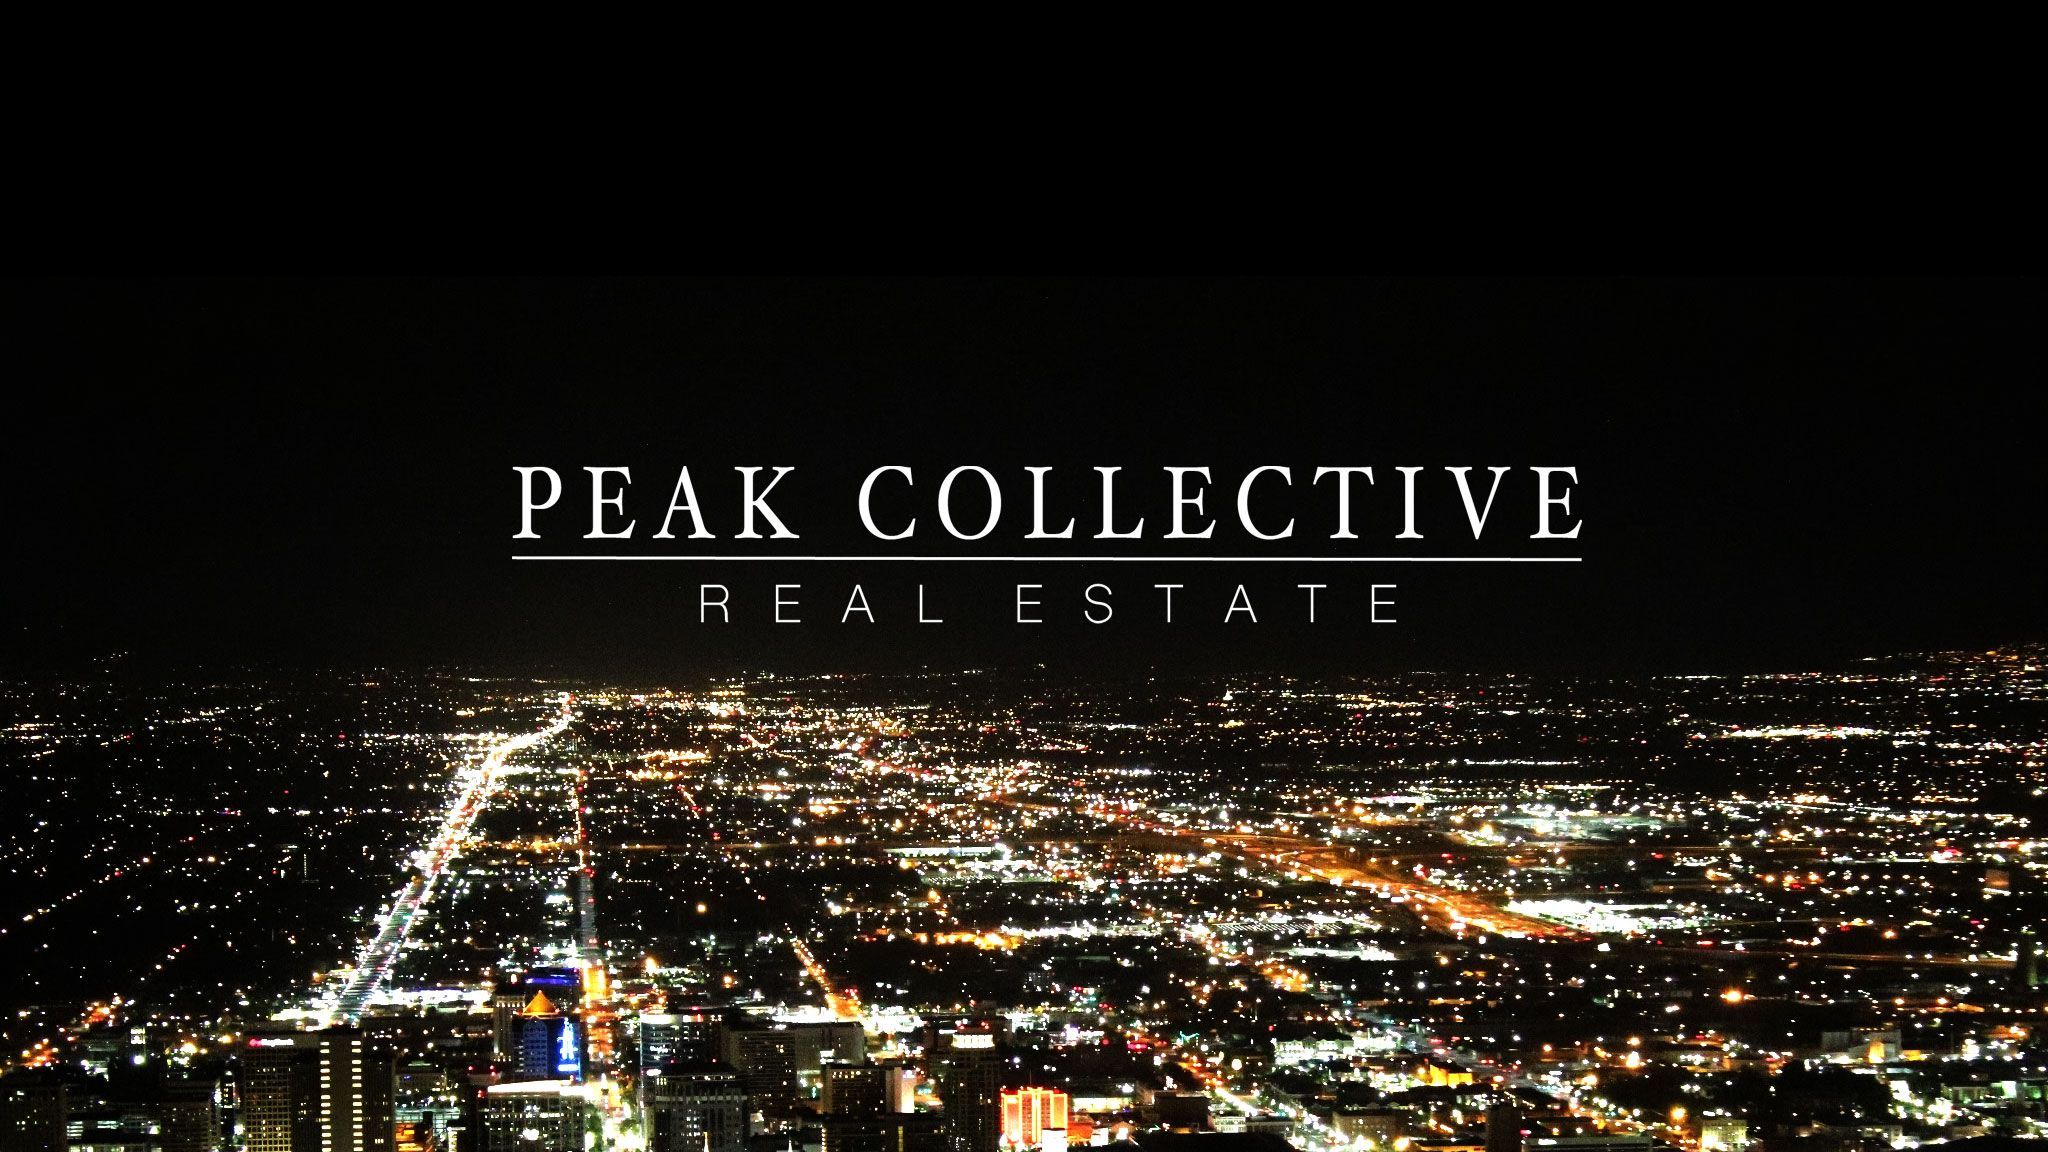 Peak Collective Real Estate